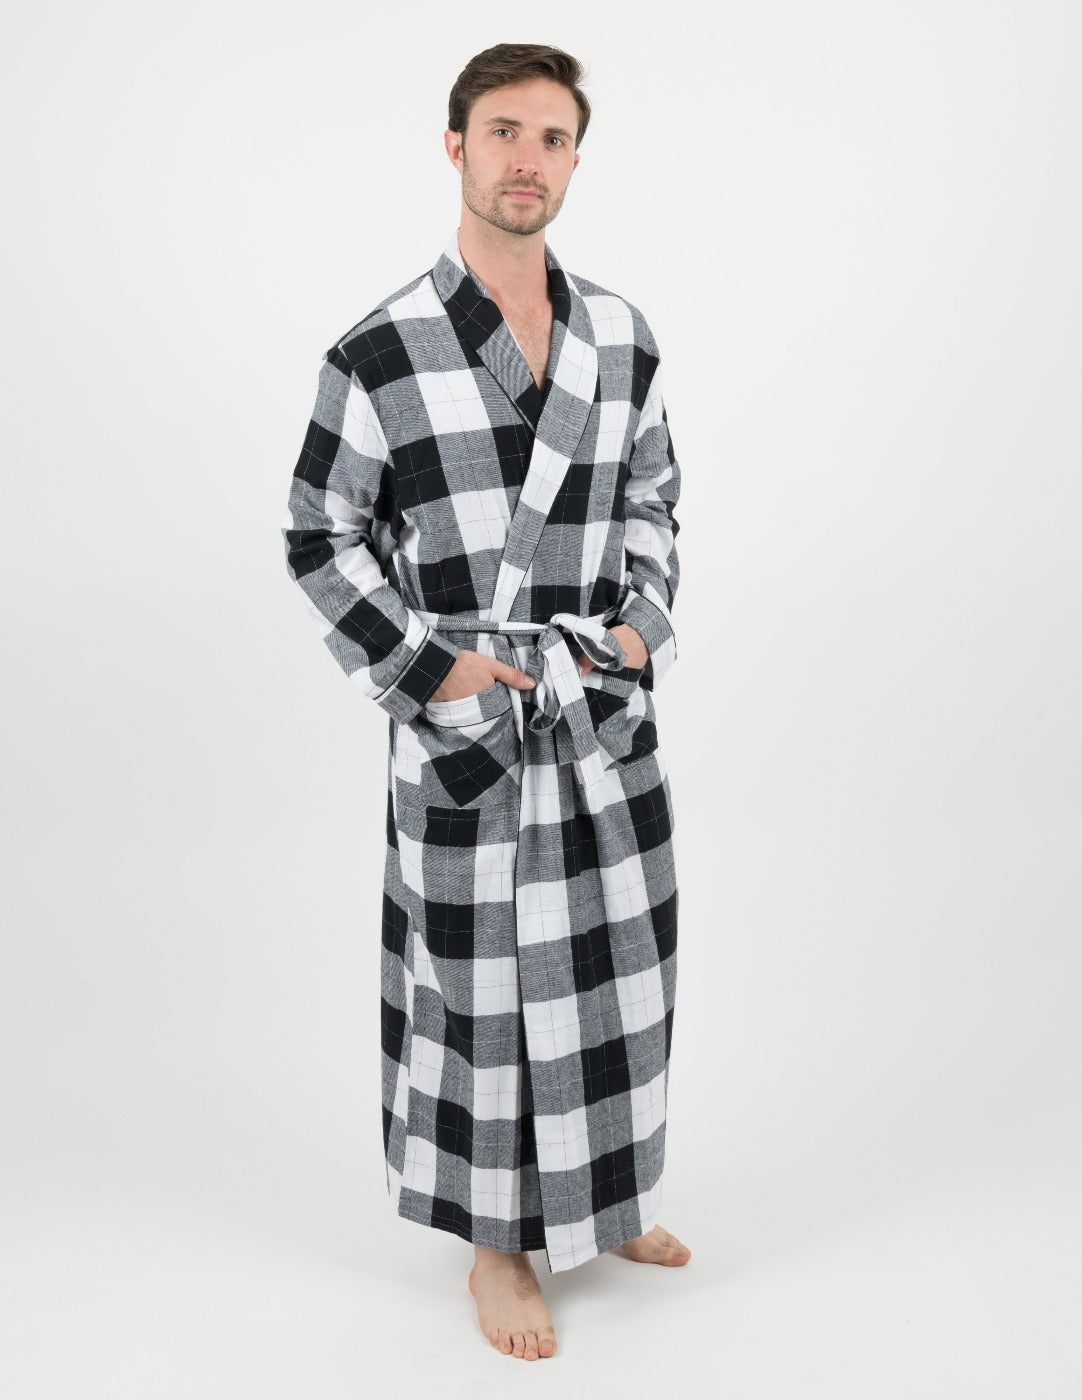 black and white plaid men's flannel robe